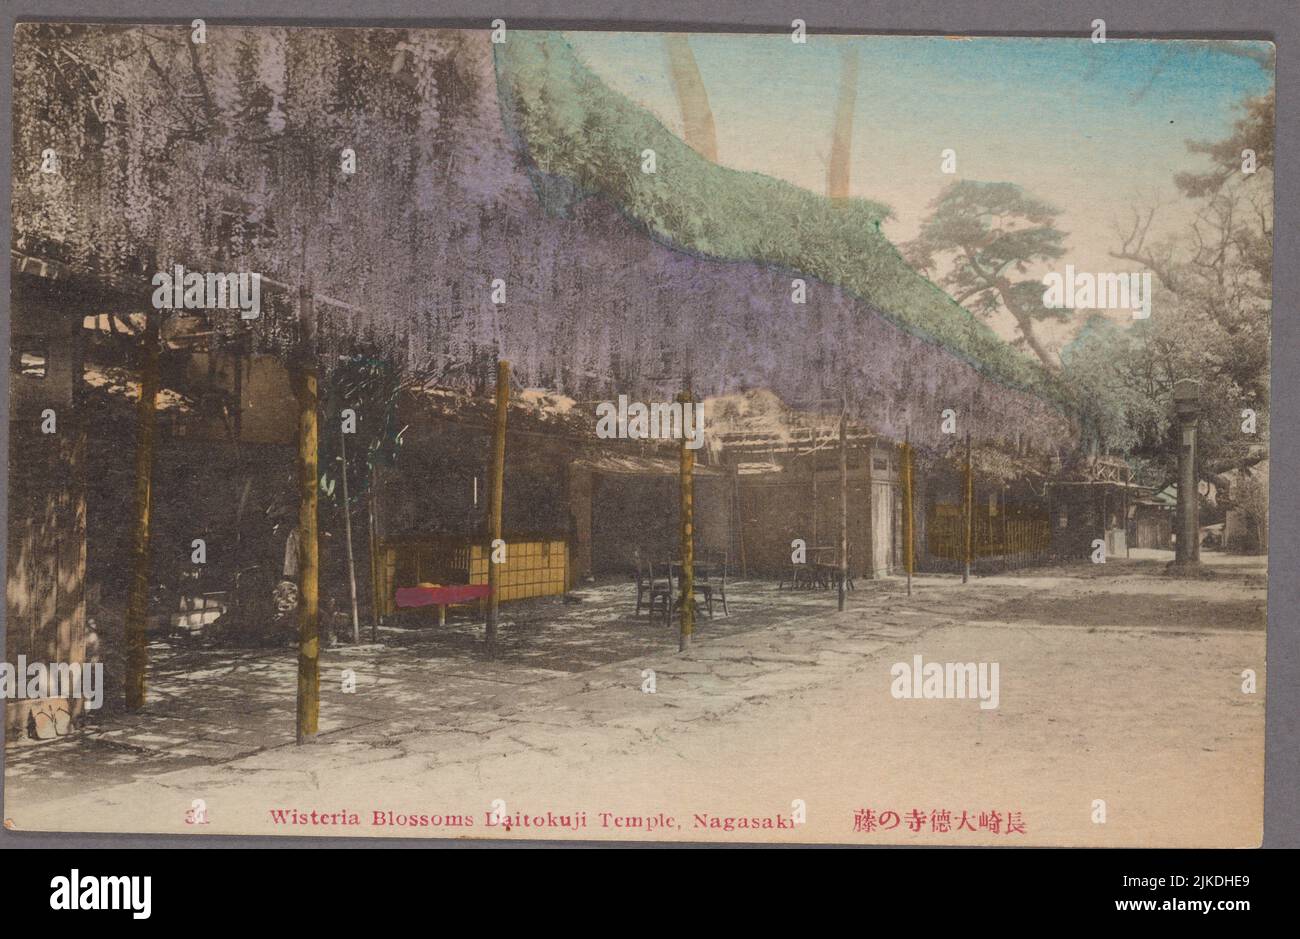 Wisteria florece Templo Daitokuji, Nagasaki. Búsquedas del Pacífico : Postales Japón - Nagasaki. Lugar: Made in Japan Editor: ns Nagasaki-shi Foto de stock